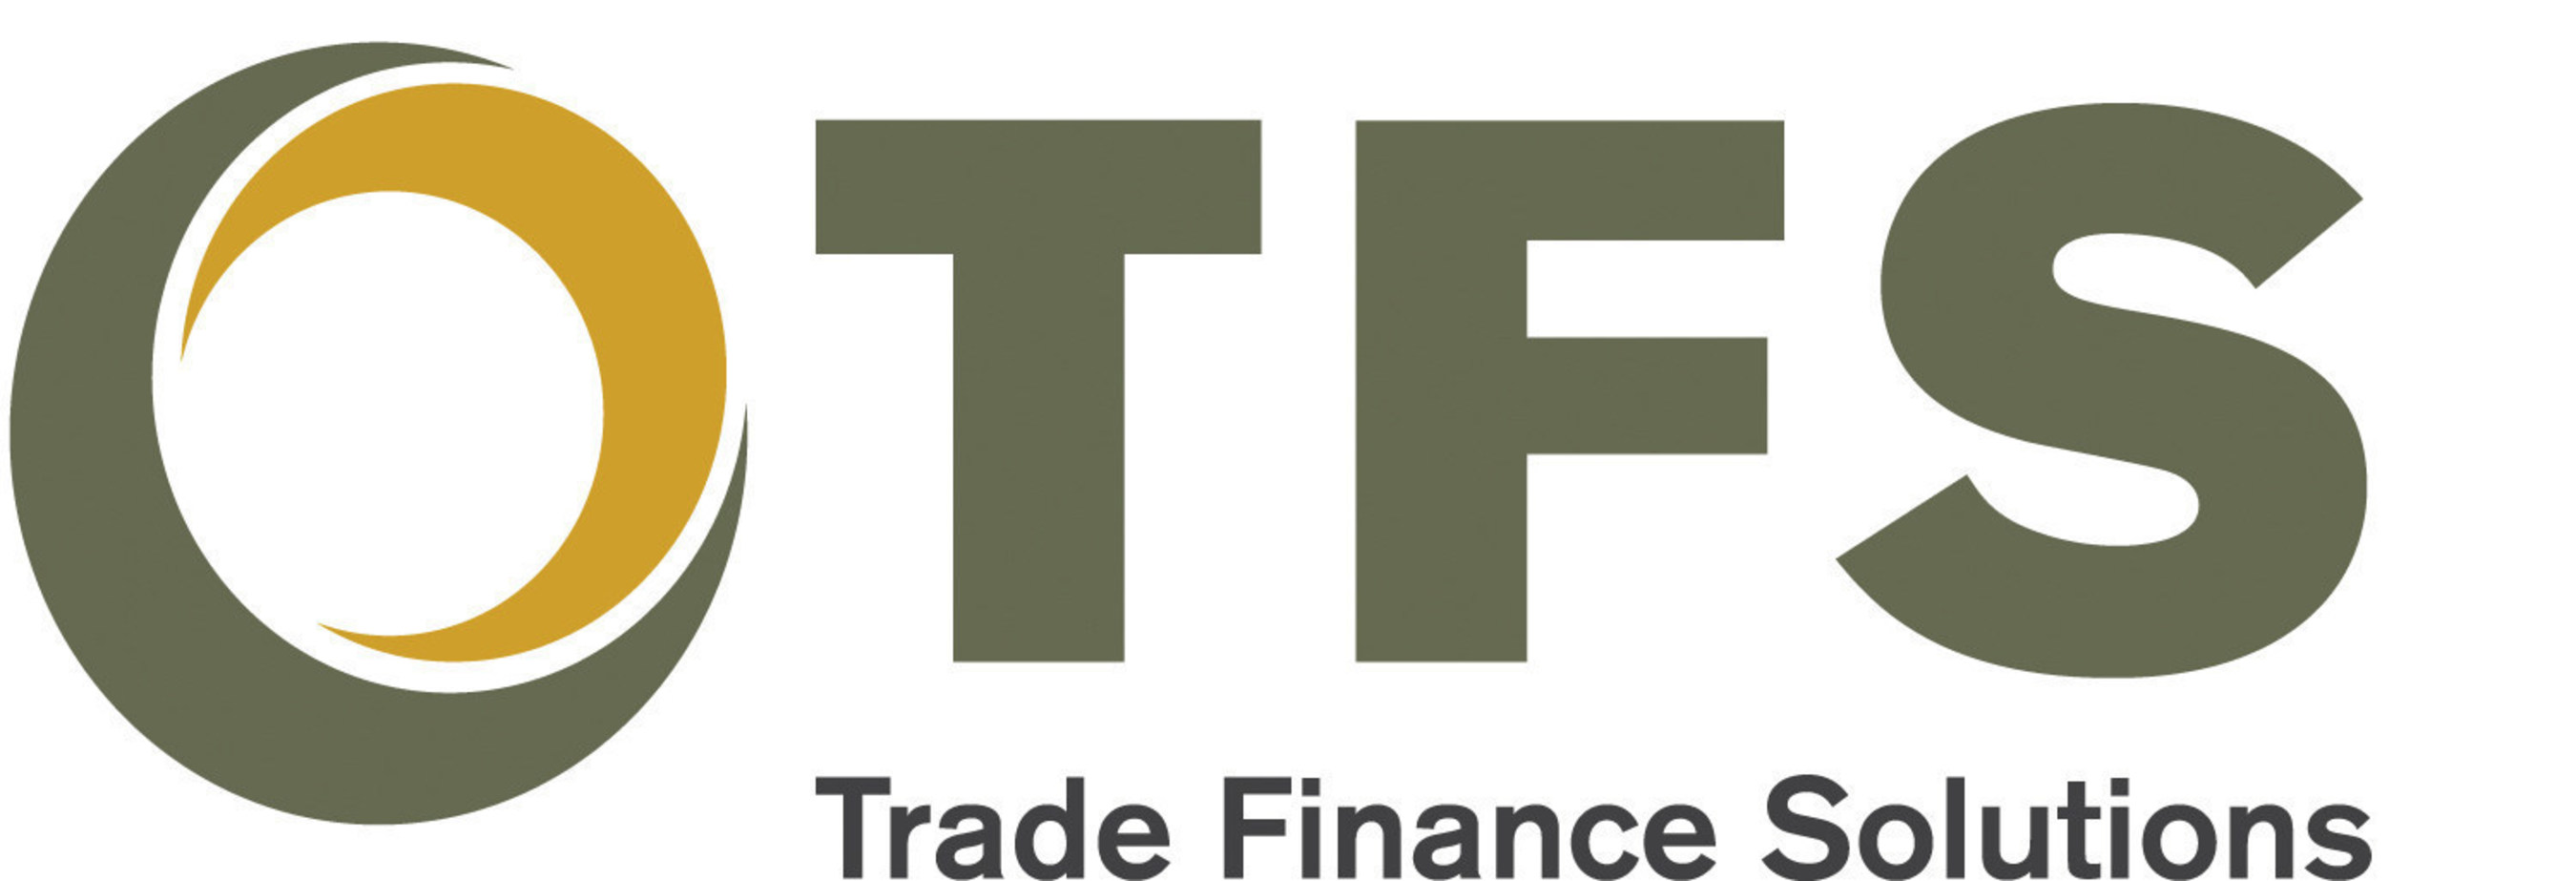 Trade Finance Solutions logo